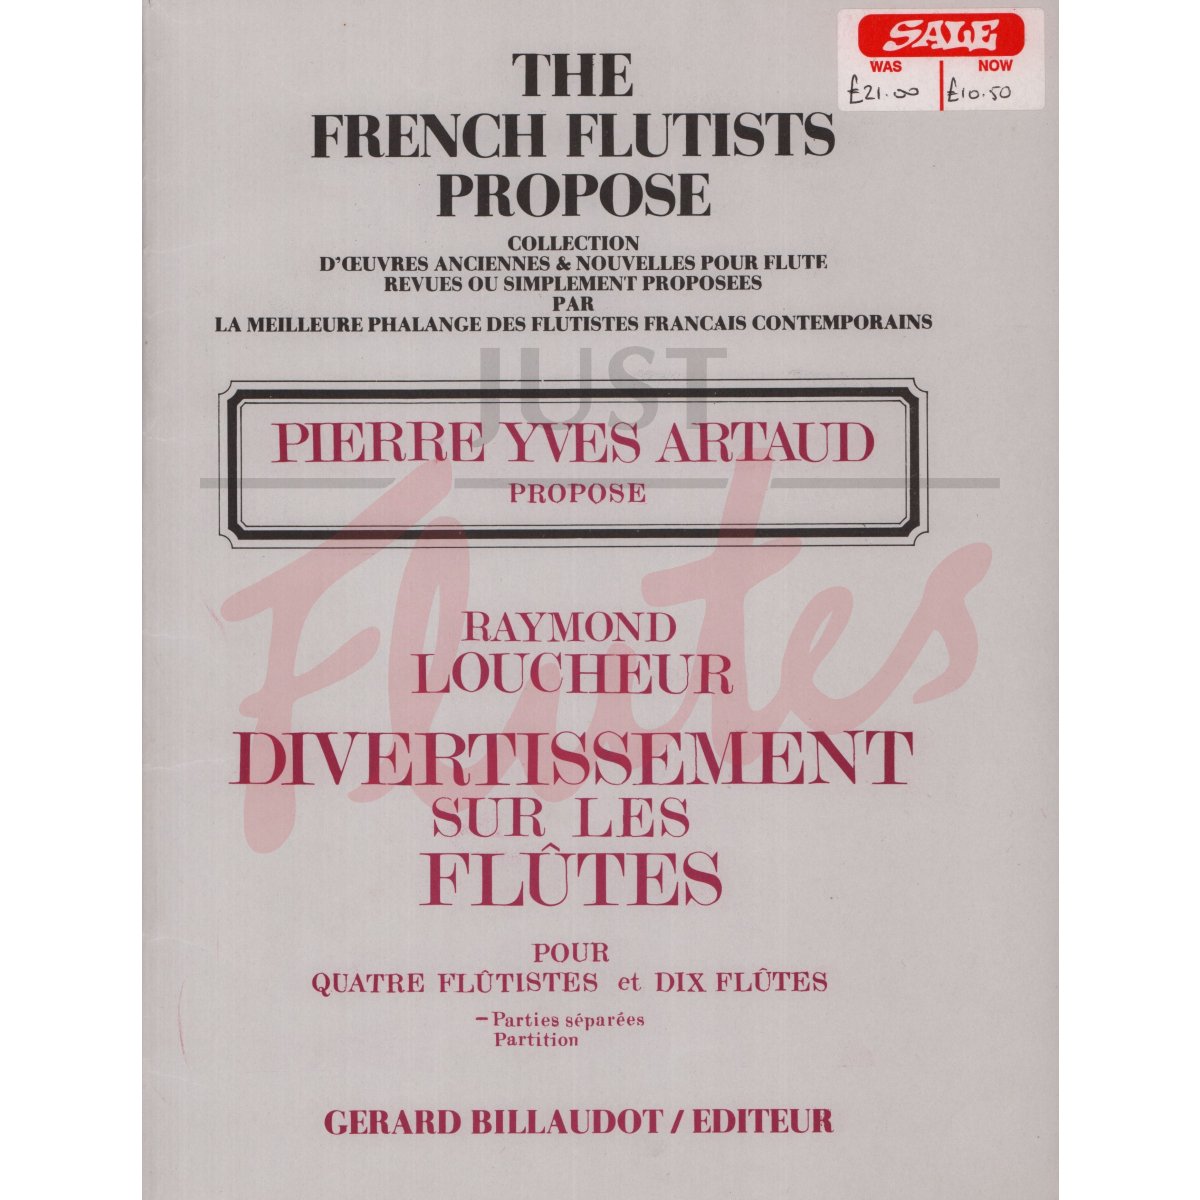 Divertissement (4 players - 10 flutes) 